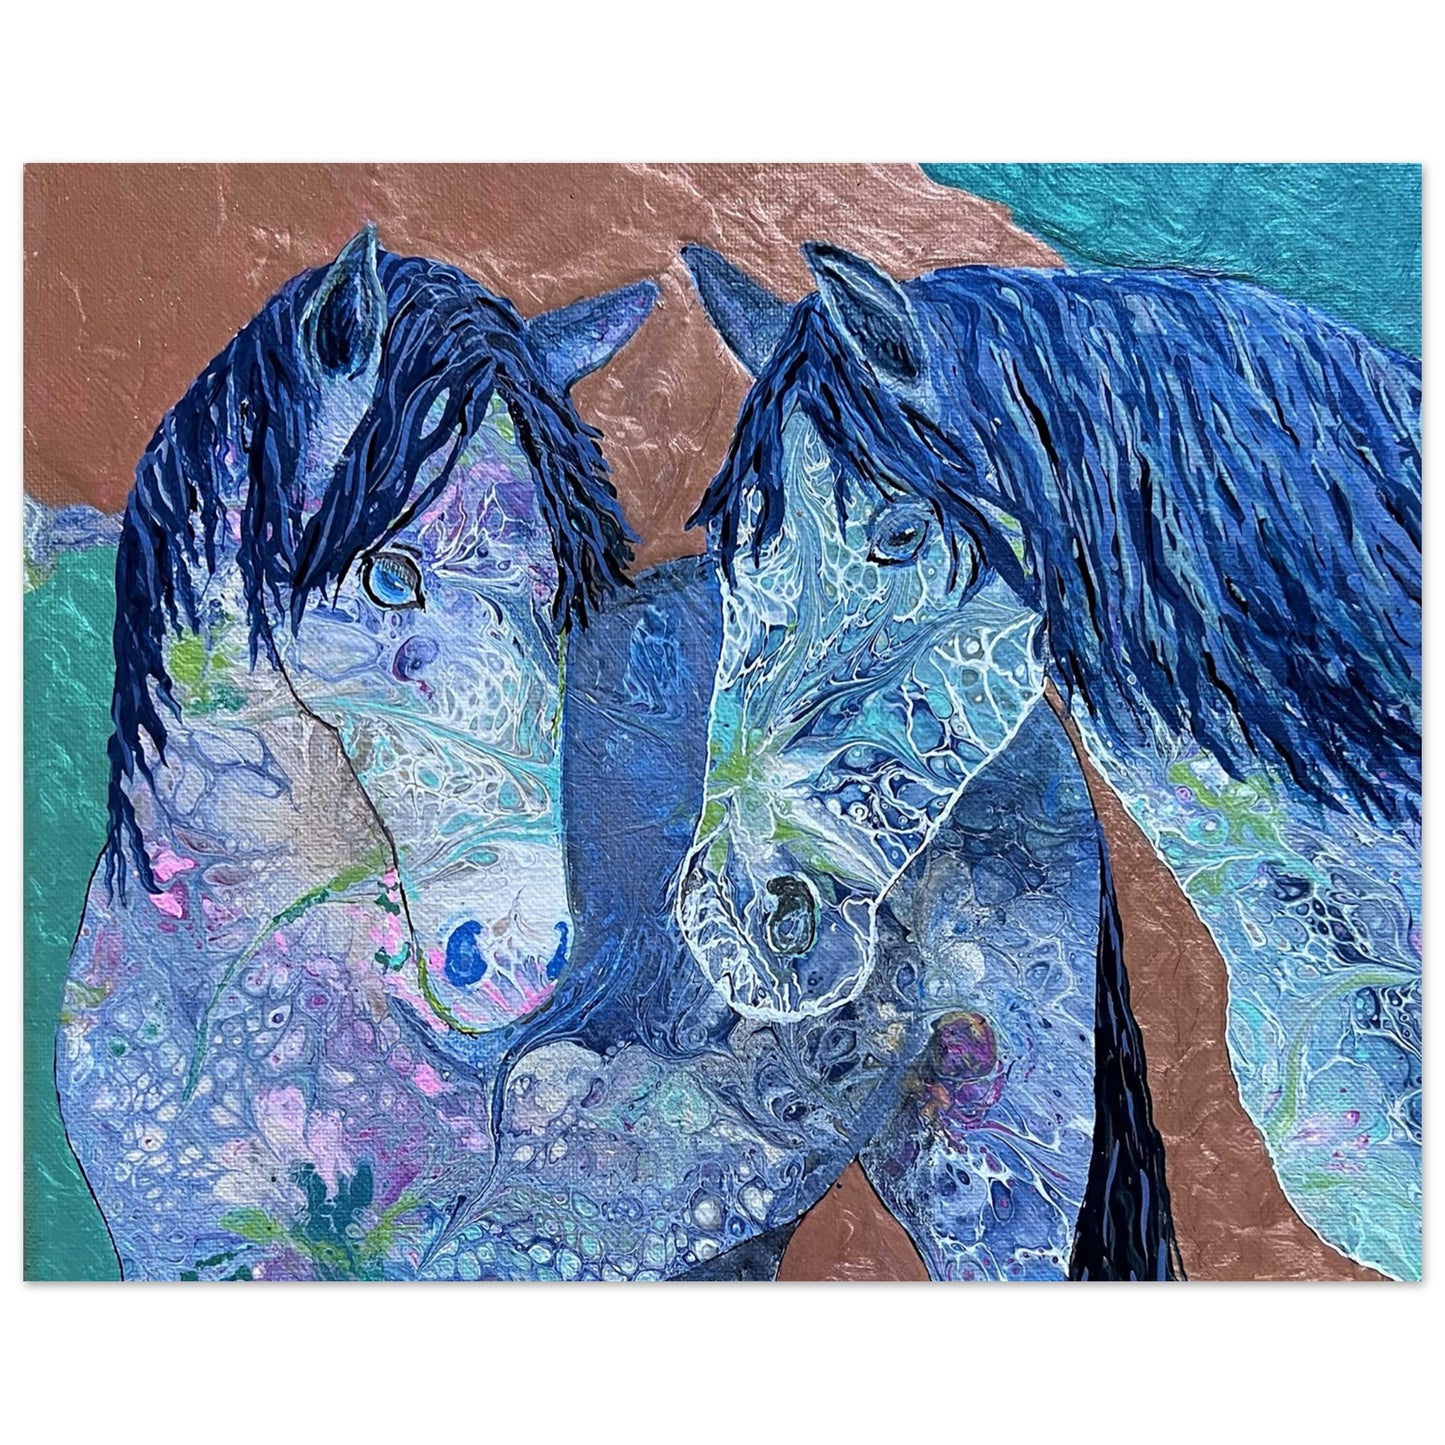 Aluminum Print "Two Horses"